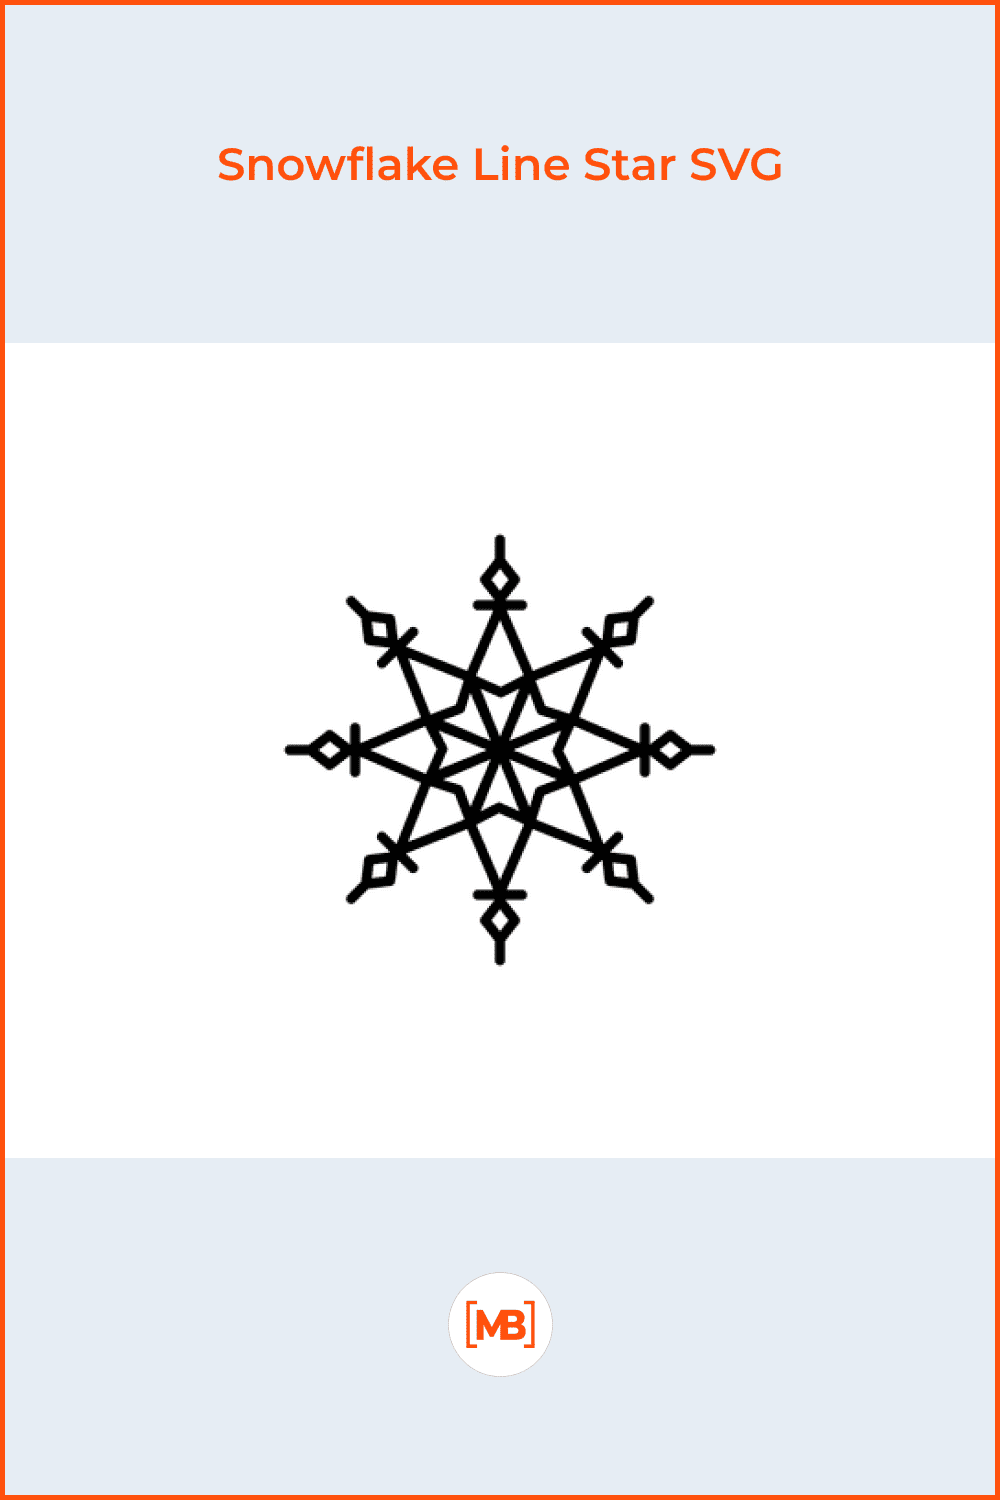 Snowflake Line Star SVG.